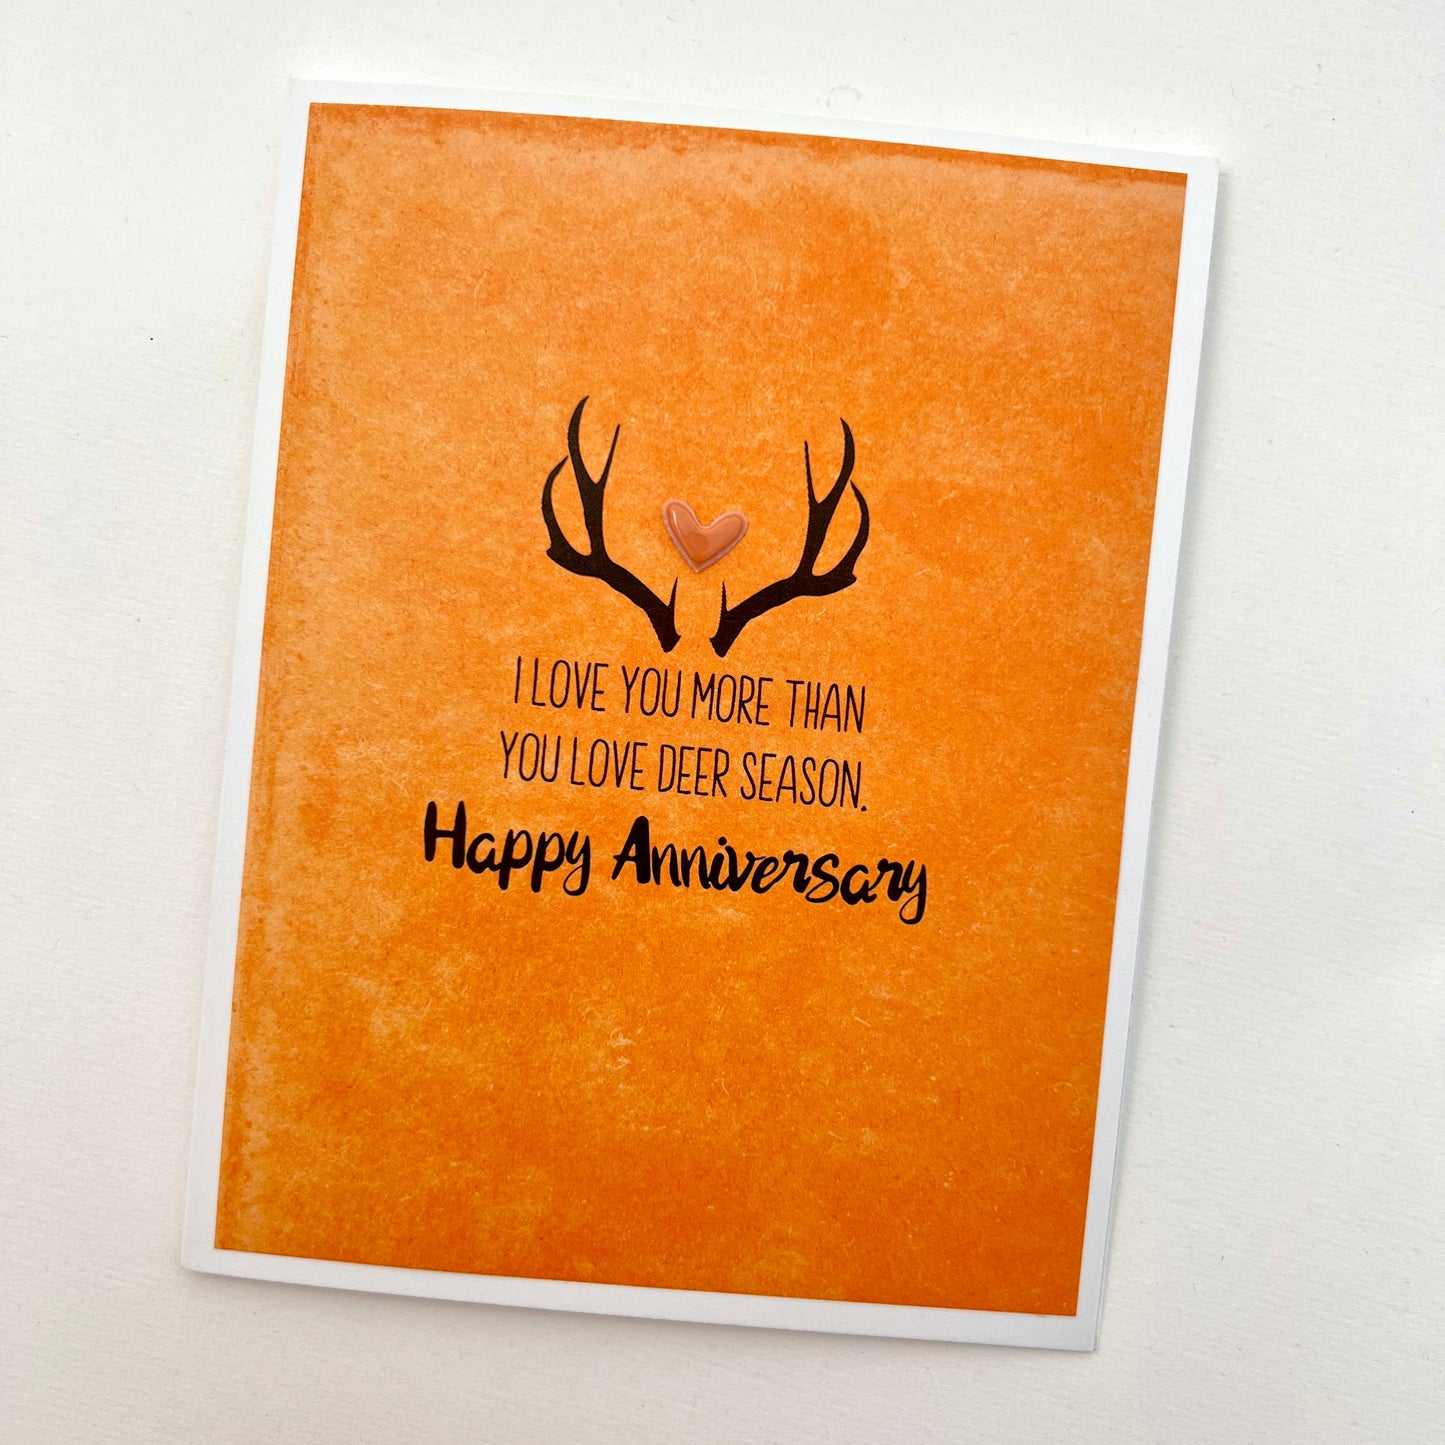 Love You More than Deer Season  card